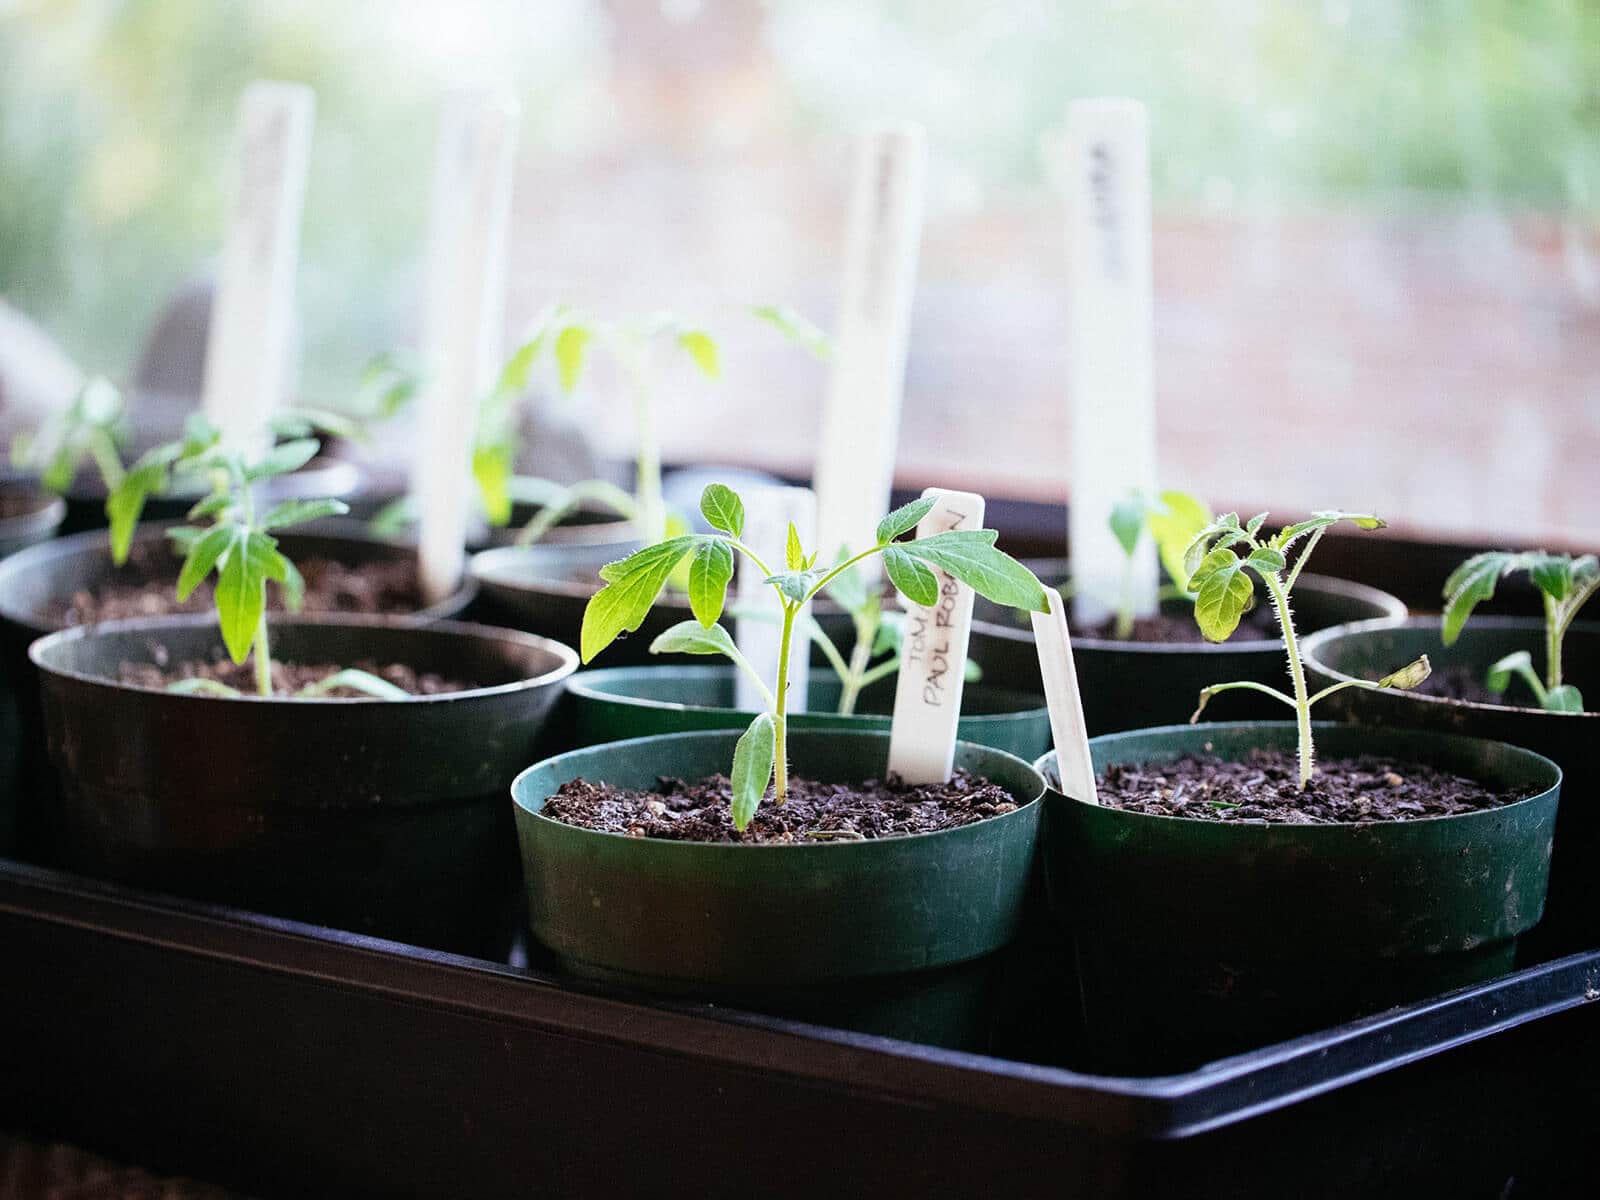 Newly transplanted tomato seedlings